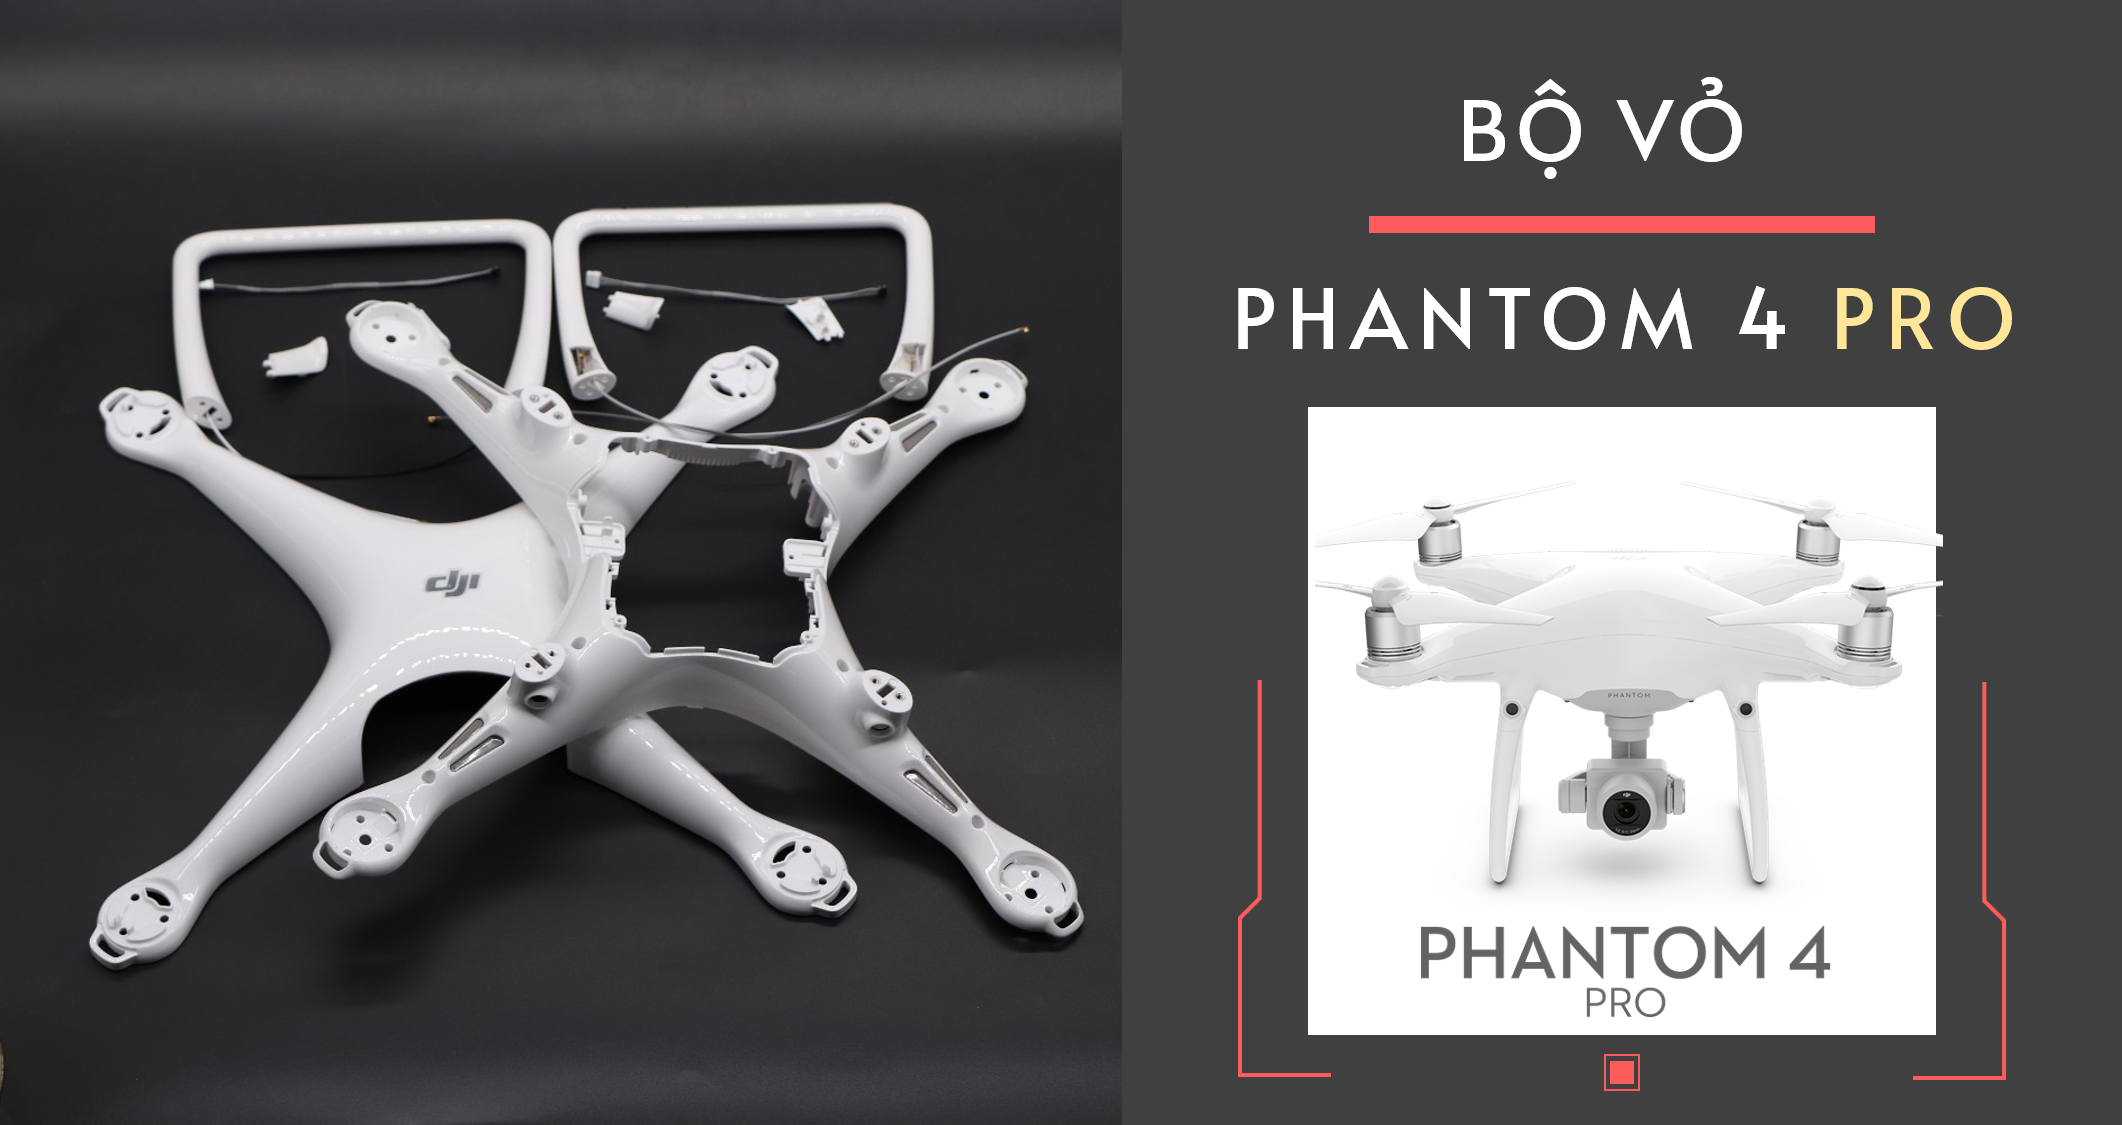 bo-vo-phantom-4-pro-chinh-hang-dji